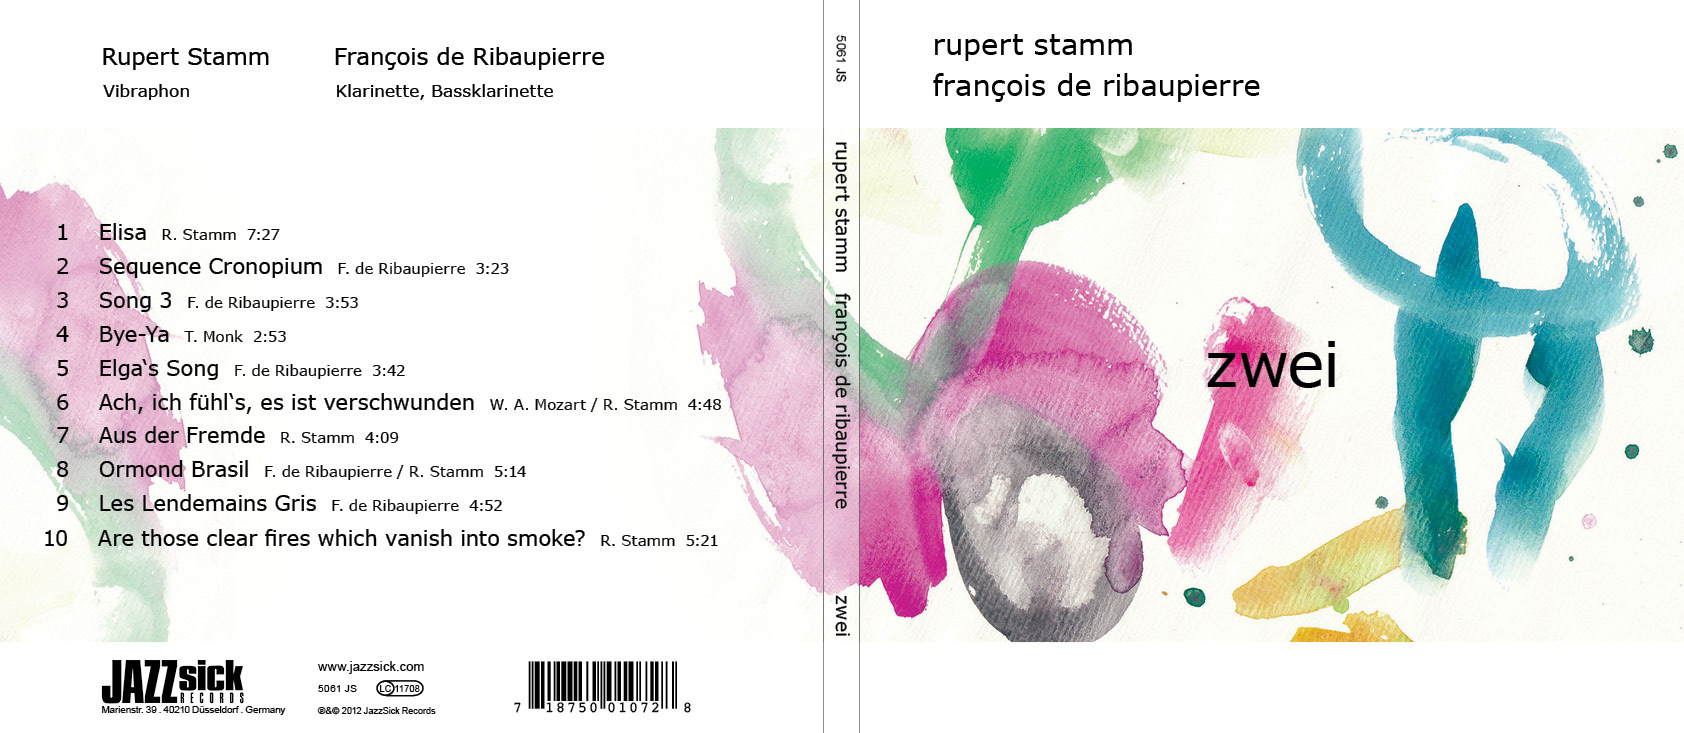 CD Cover, Ruper Stamm und François de Ribaupierre